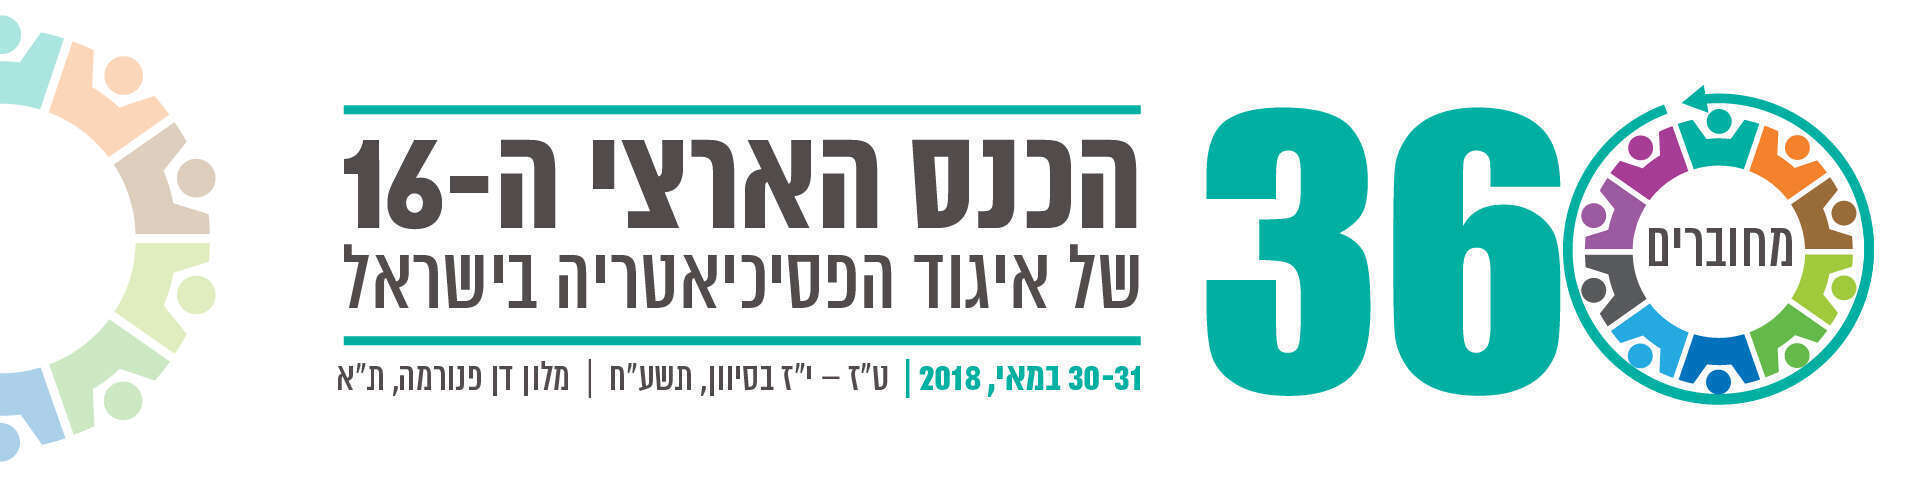 כנס איגוד הפסיכיאטריה בישראל 2018